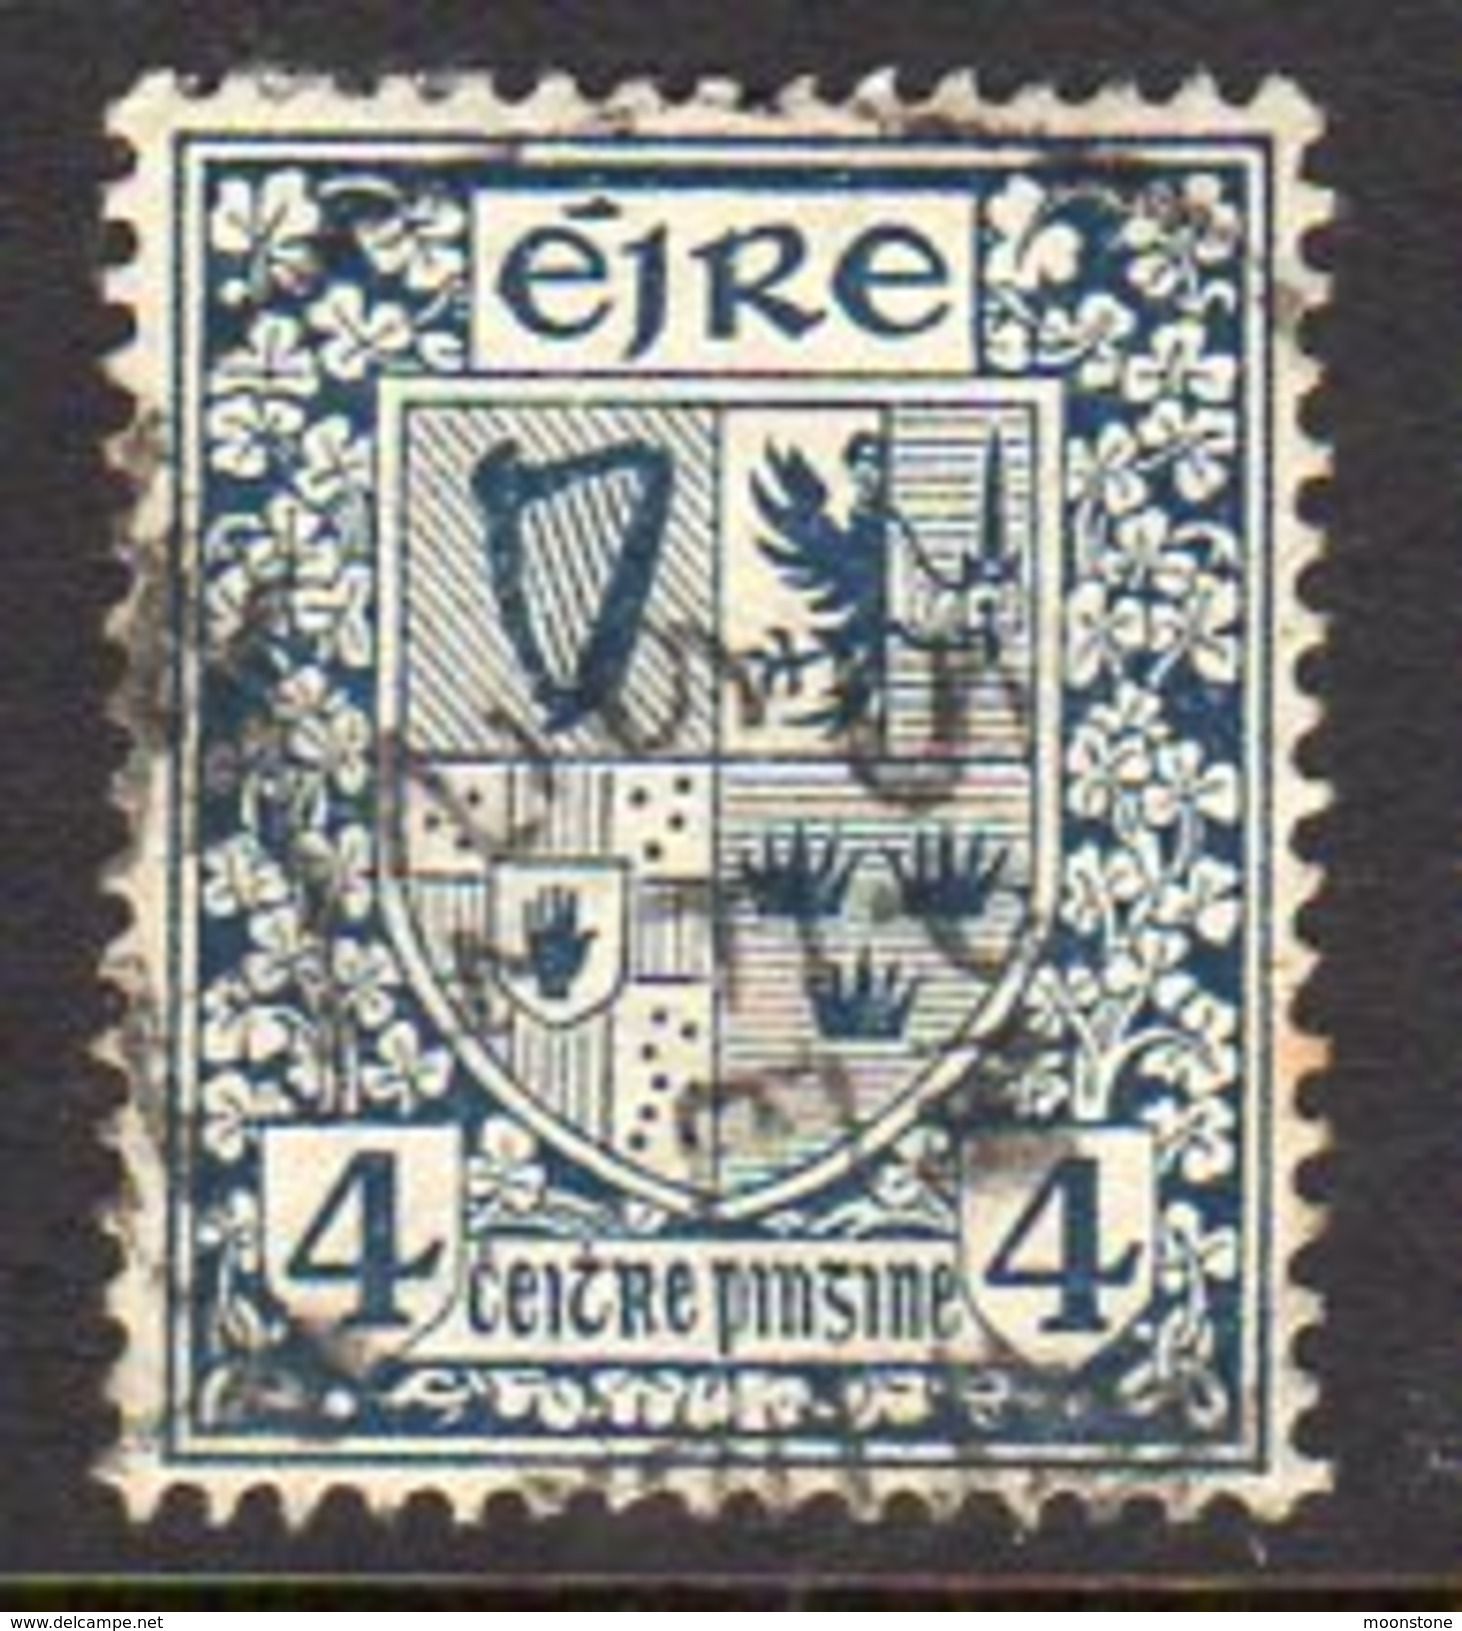 Ireland 1922-34 4d Definitive, Wmk. SE, Used, SG 77 - Ongebruikt